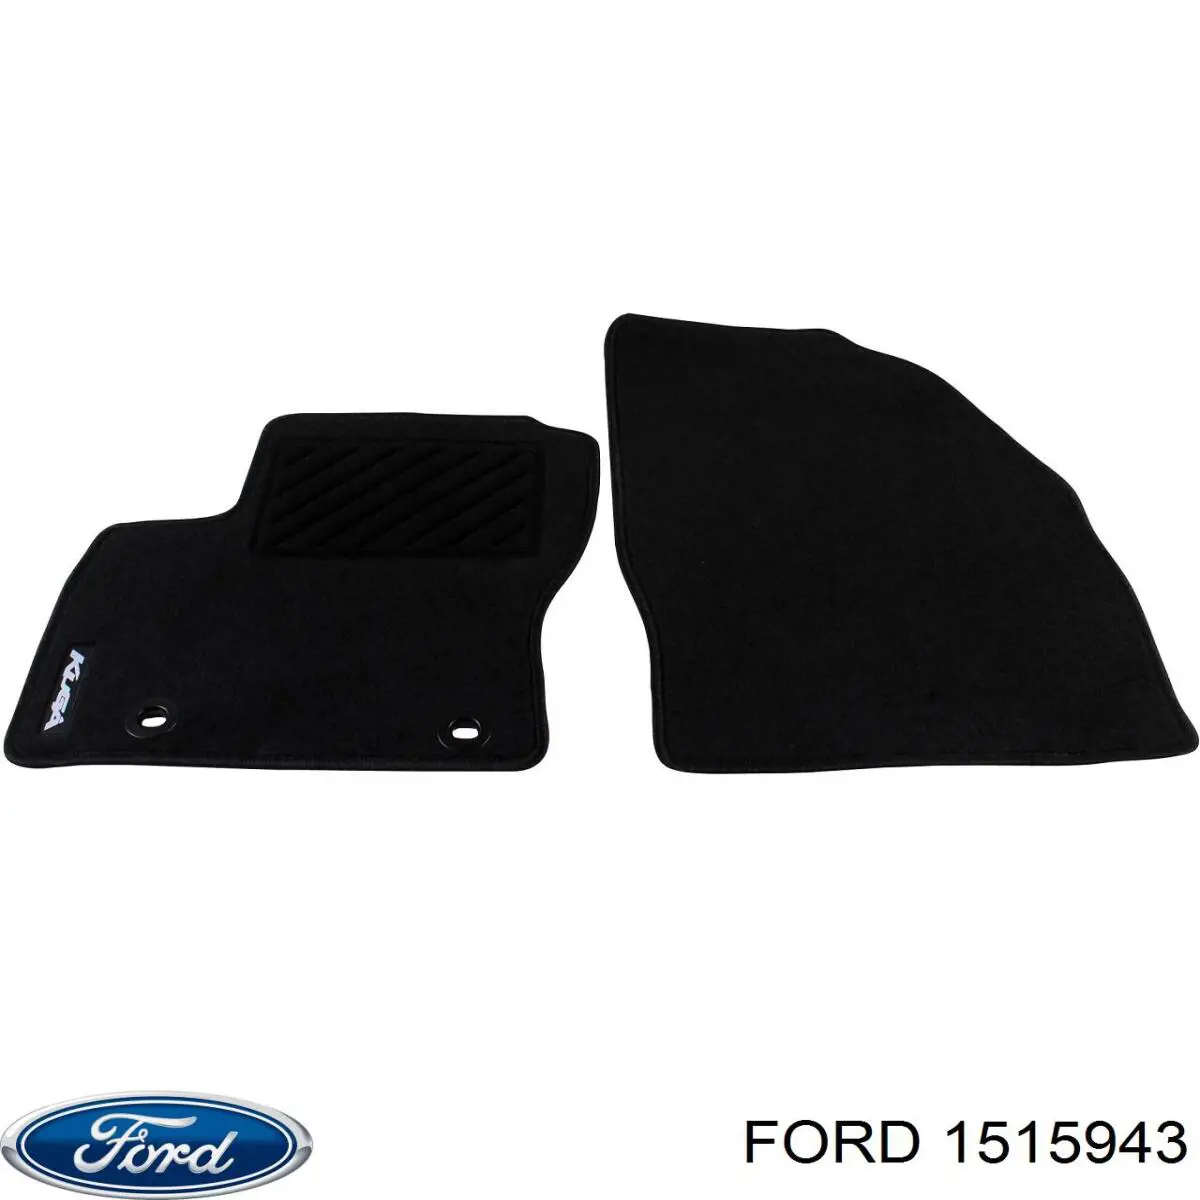 1515943 Ford alfombrillas